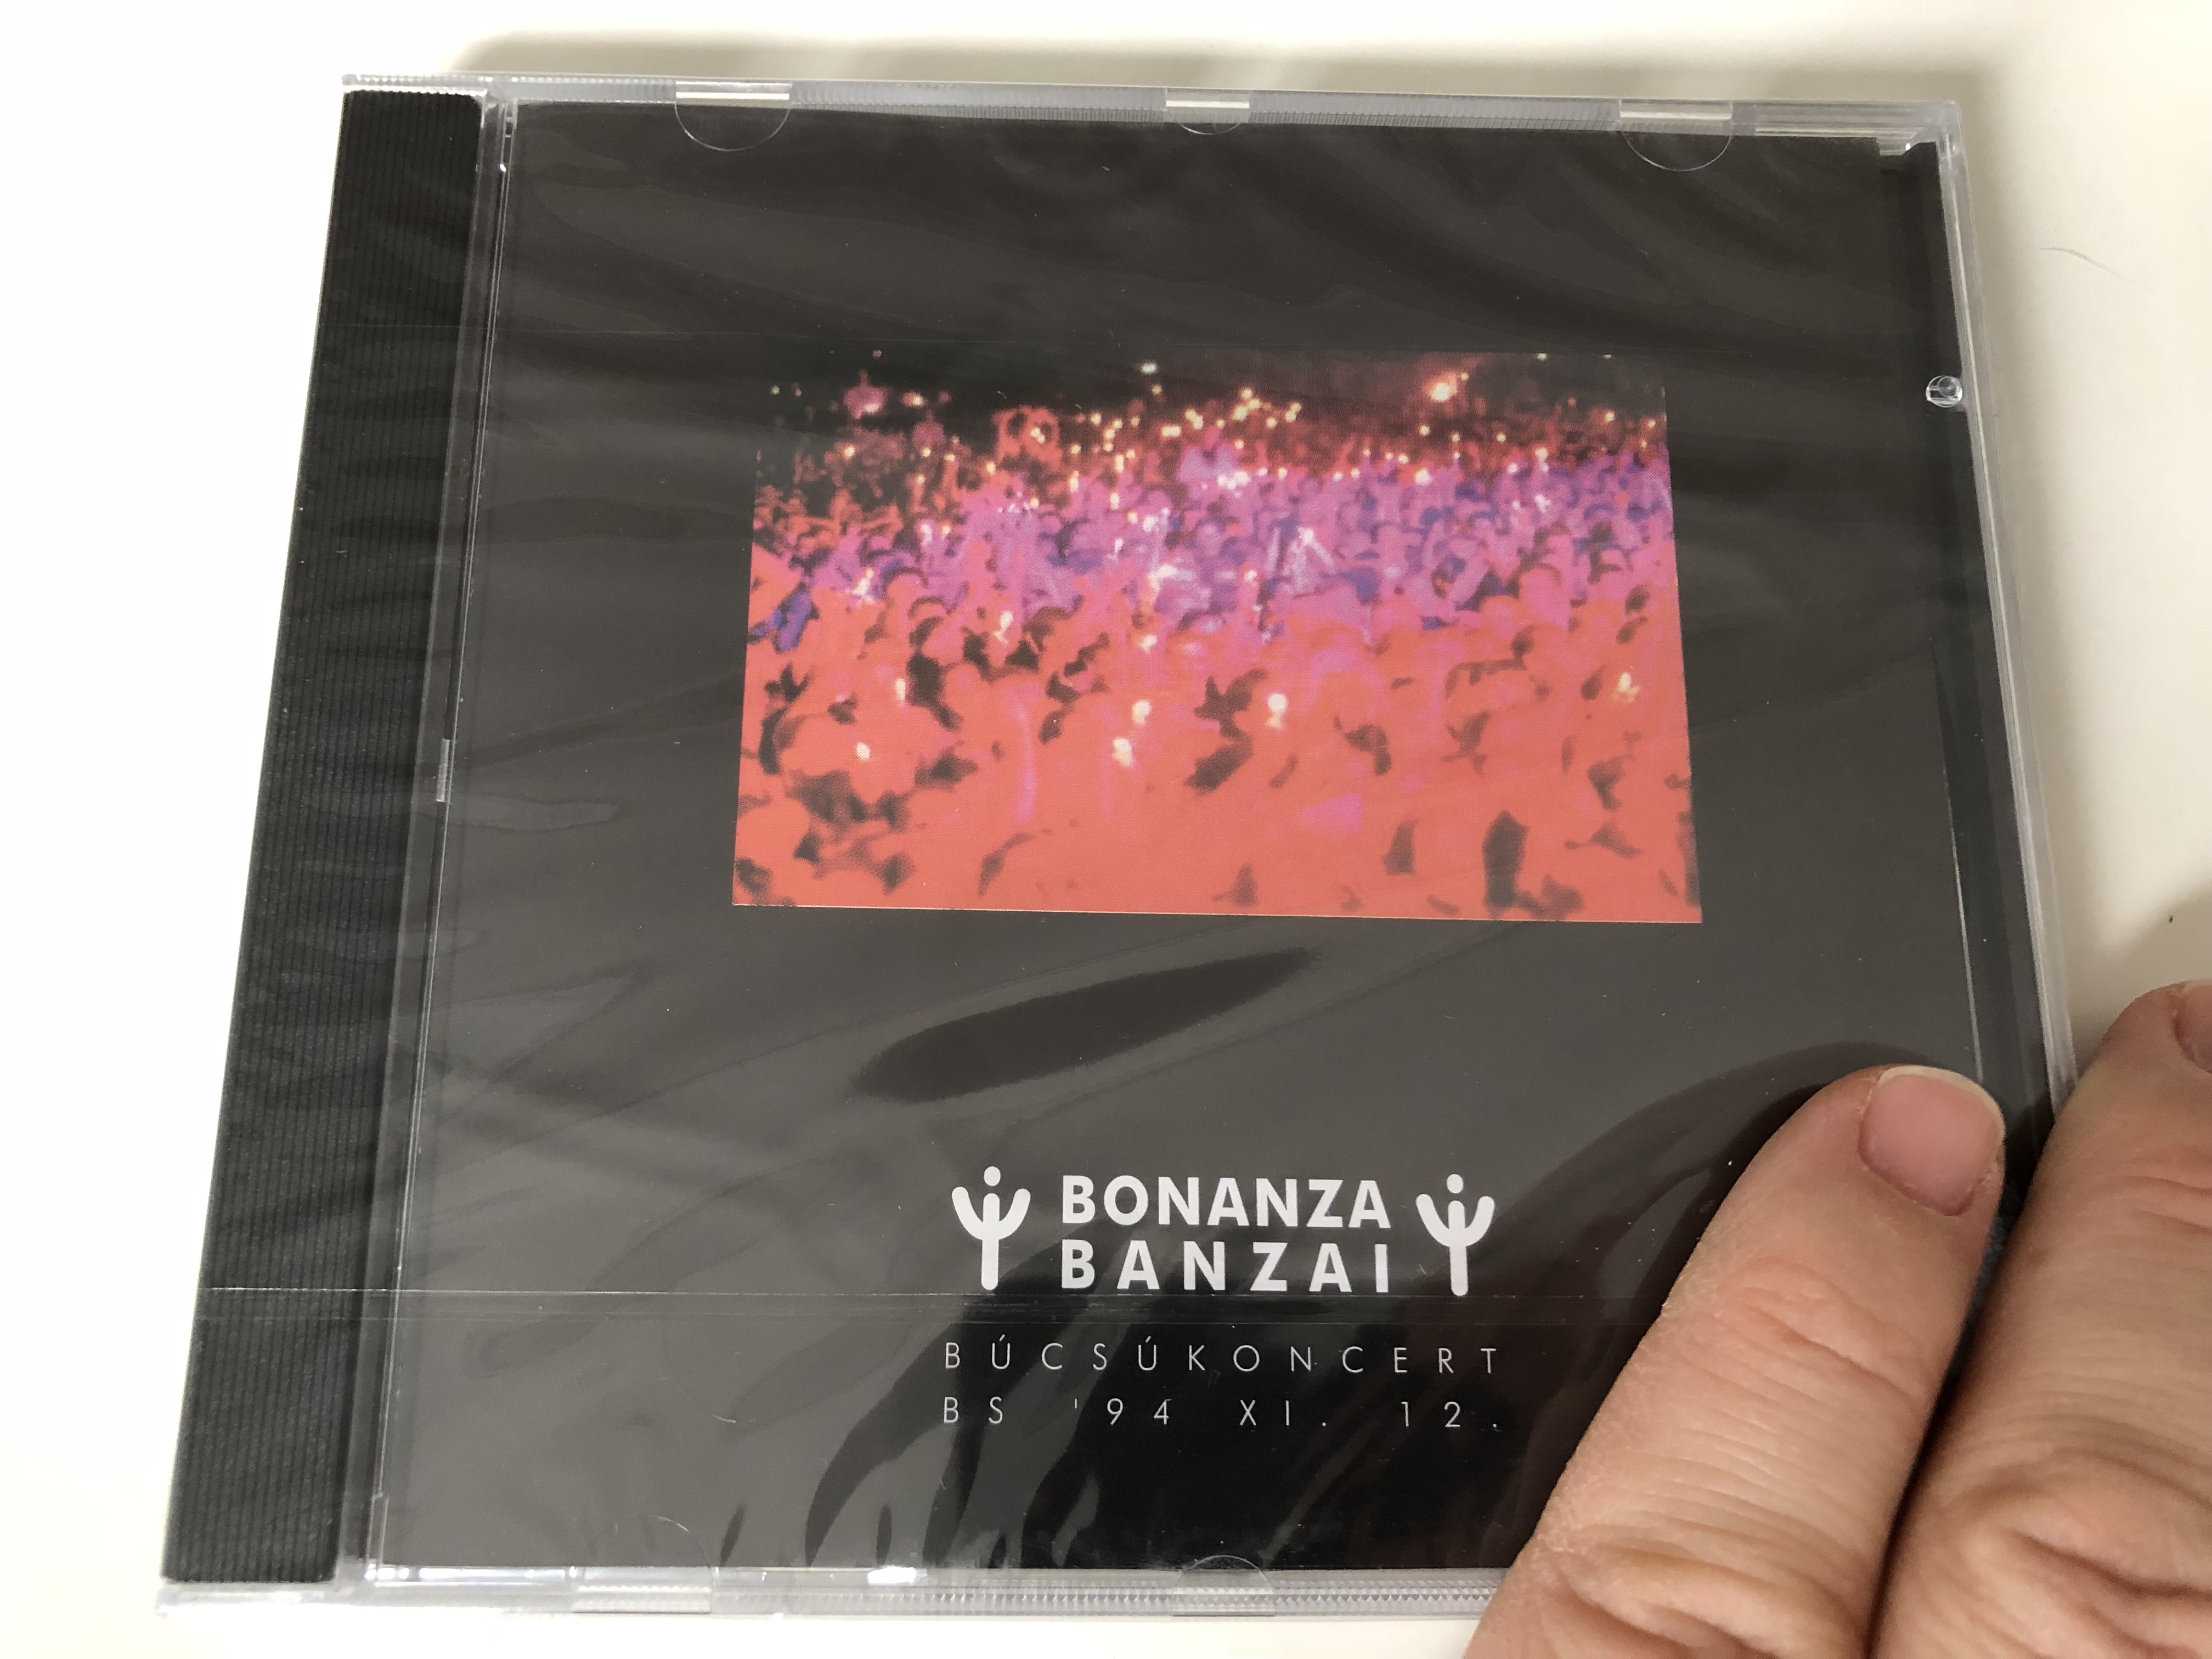 bonanza-banzai-b-cs-koncert-bs-94-audio-cd-1995-bmg-ariola-hungary-1-.jpg